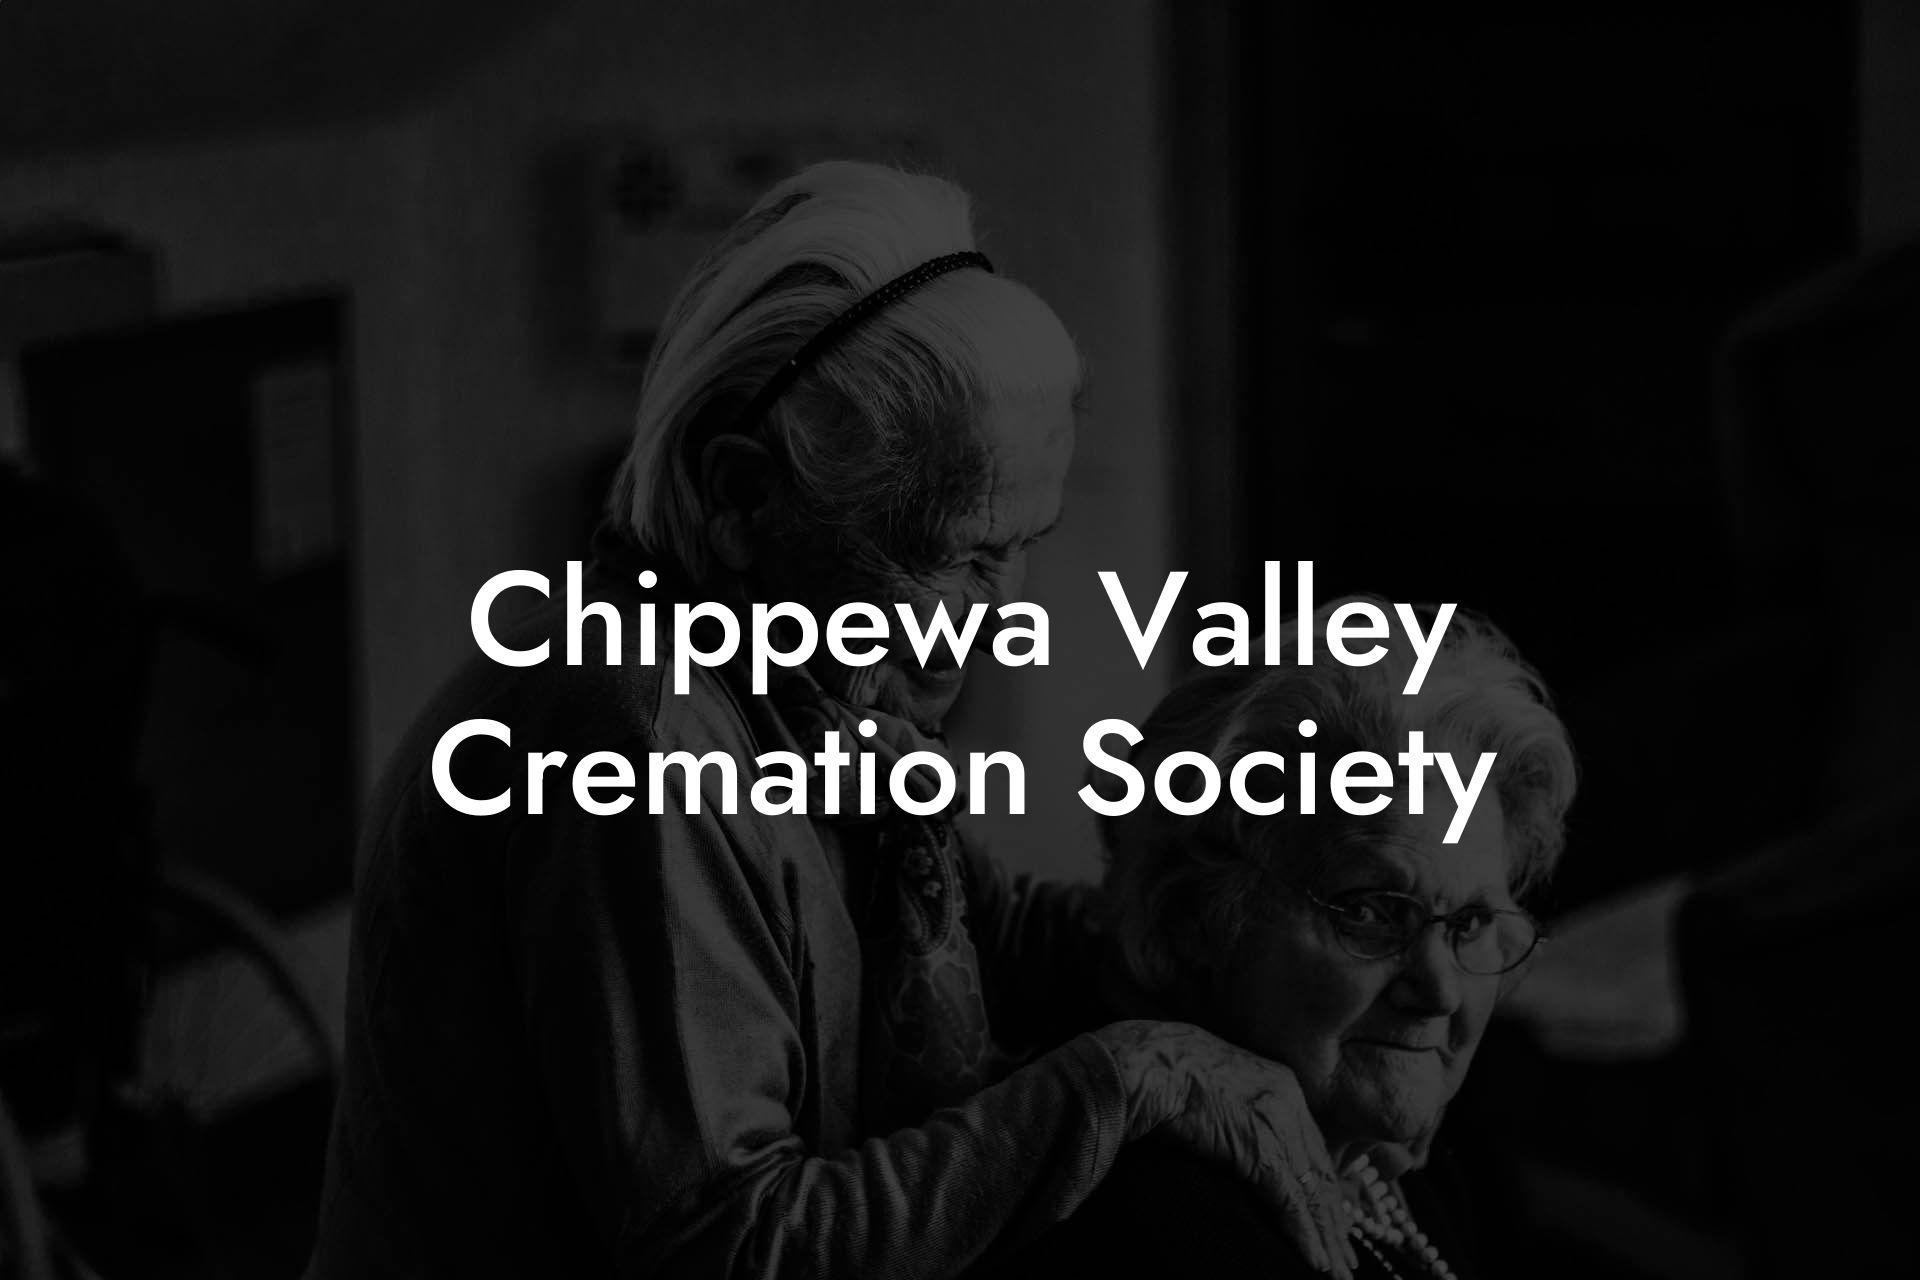 Chippewa Valley Cremation Society